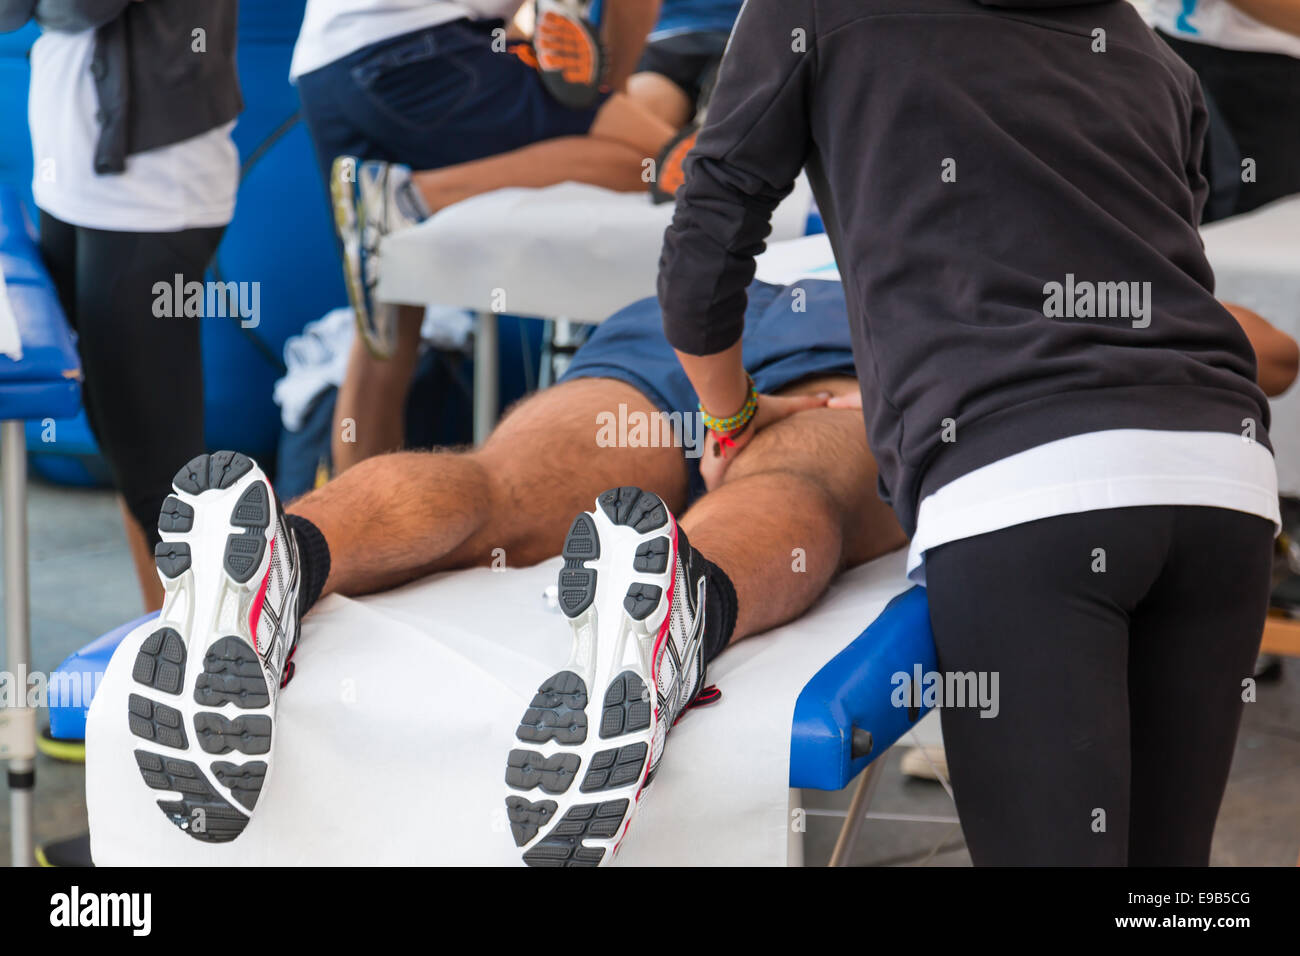 athletes relaxation massage before sport event, marathon muscles massage Stock Photo